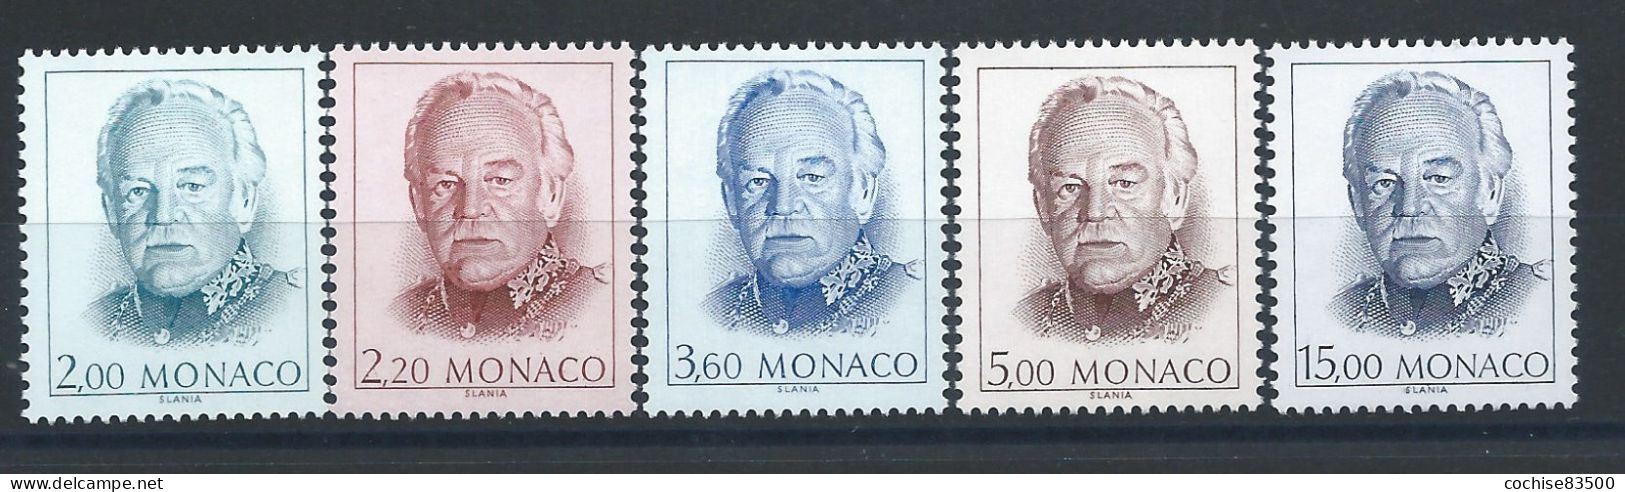 Monaco N°1671/75** (MNH) 1989 - Prince Rainier III - Neufs